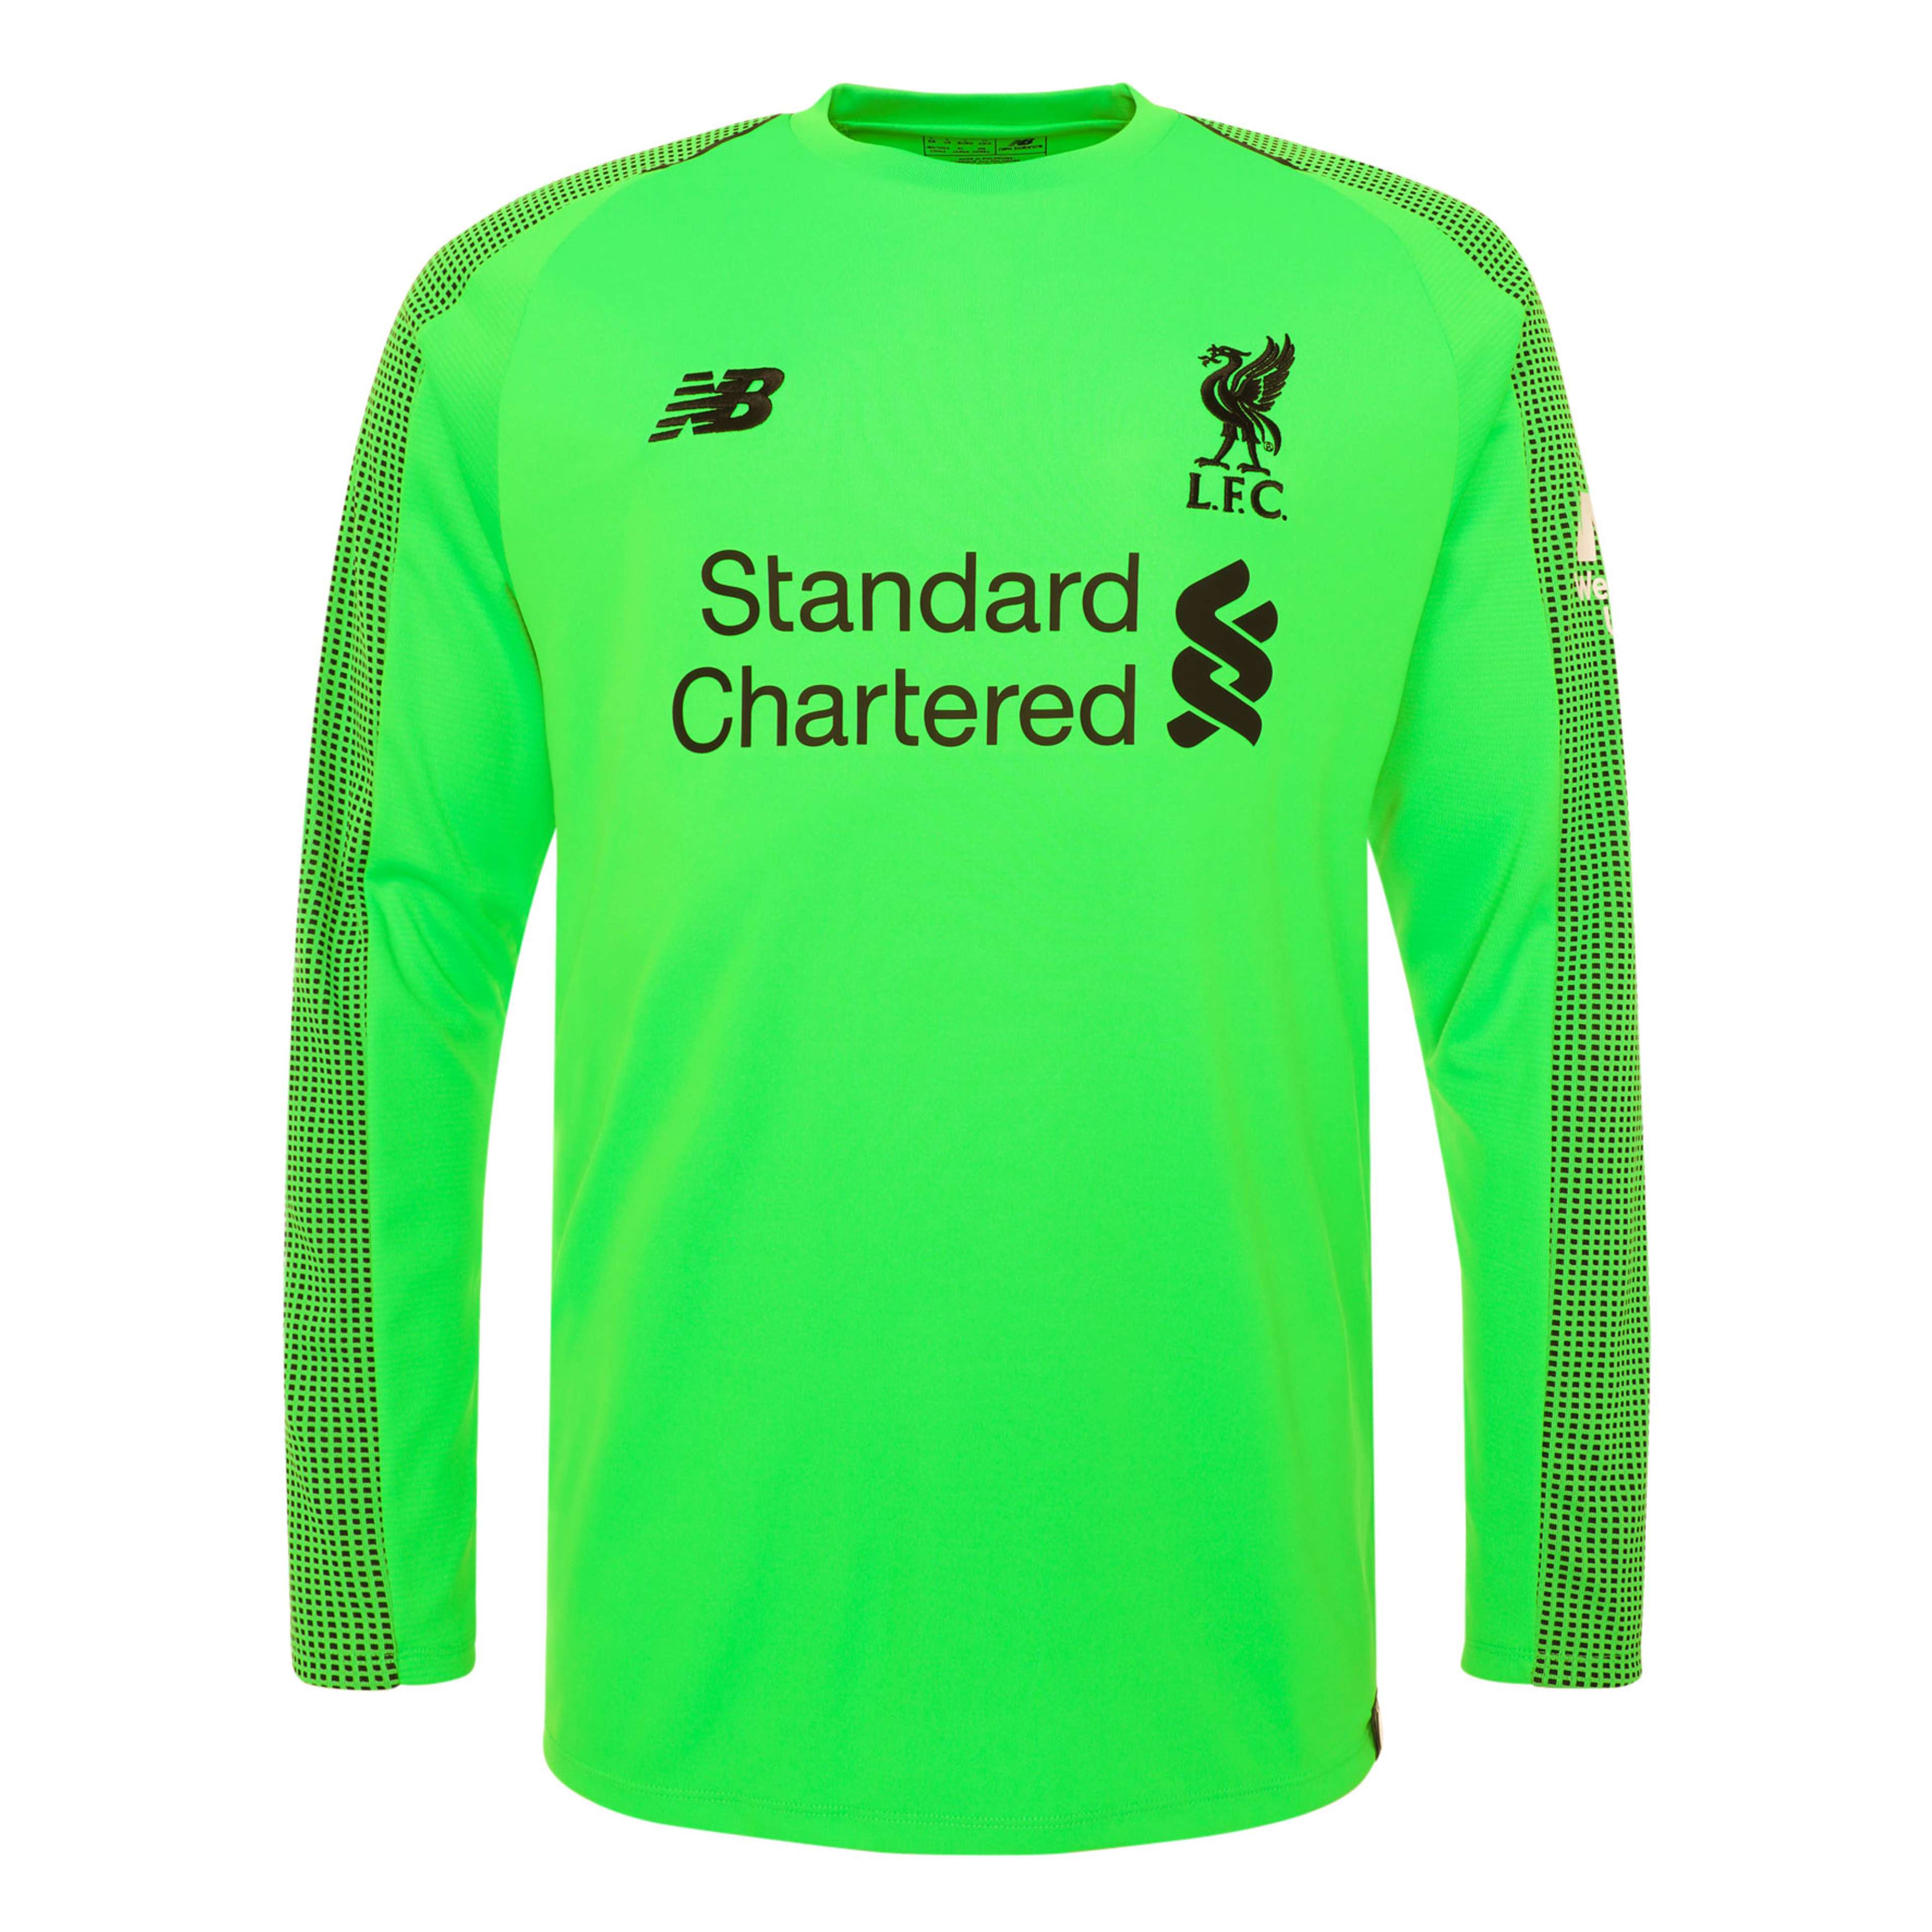 Liverpool 18/19 away kit